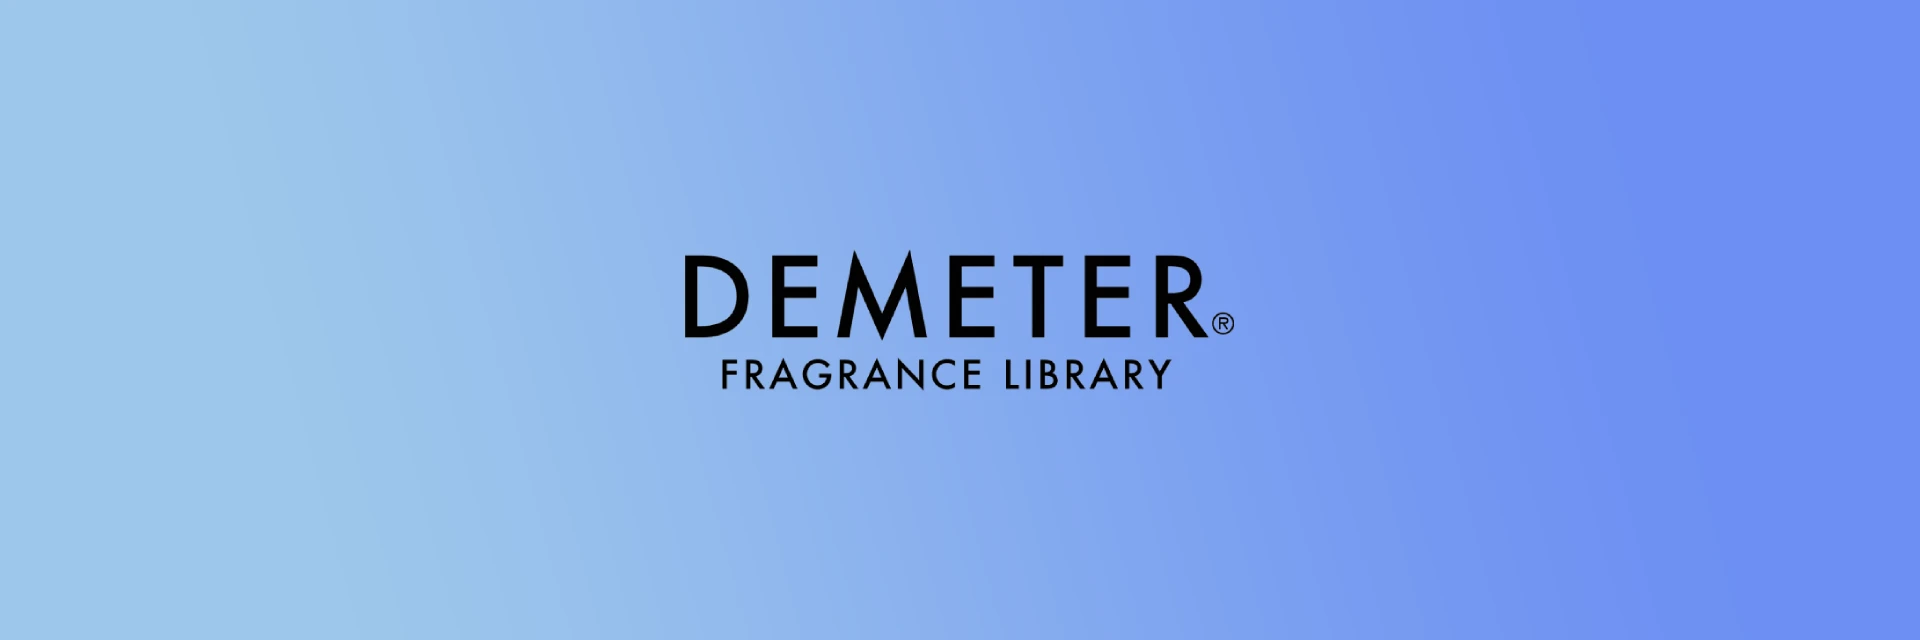 Image of Demeter perfume brand logo